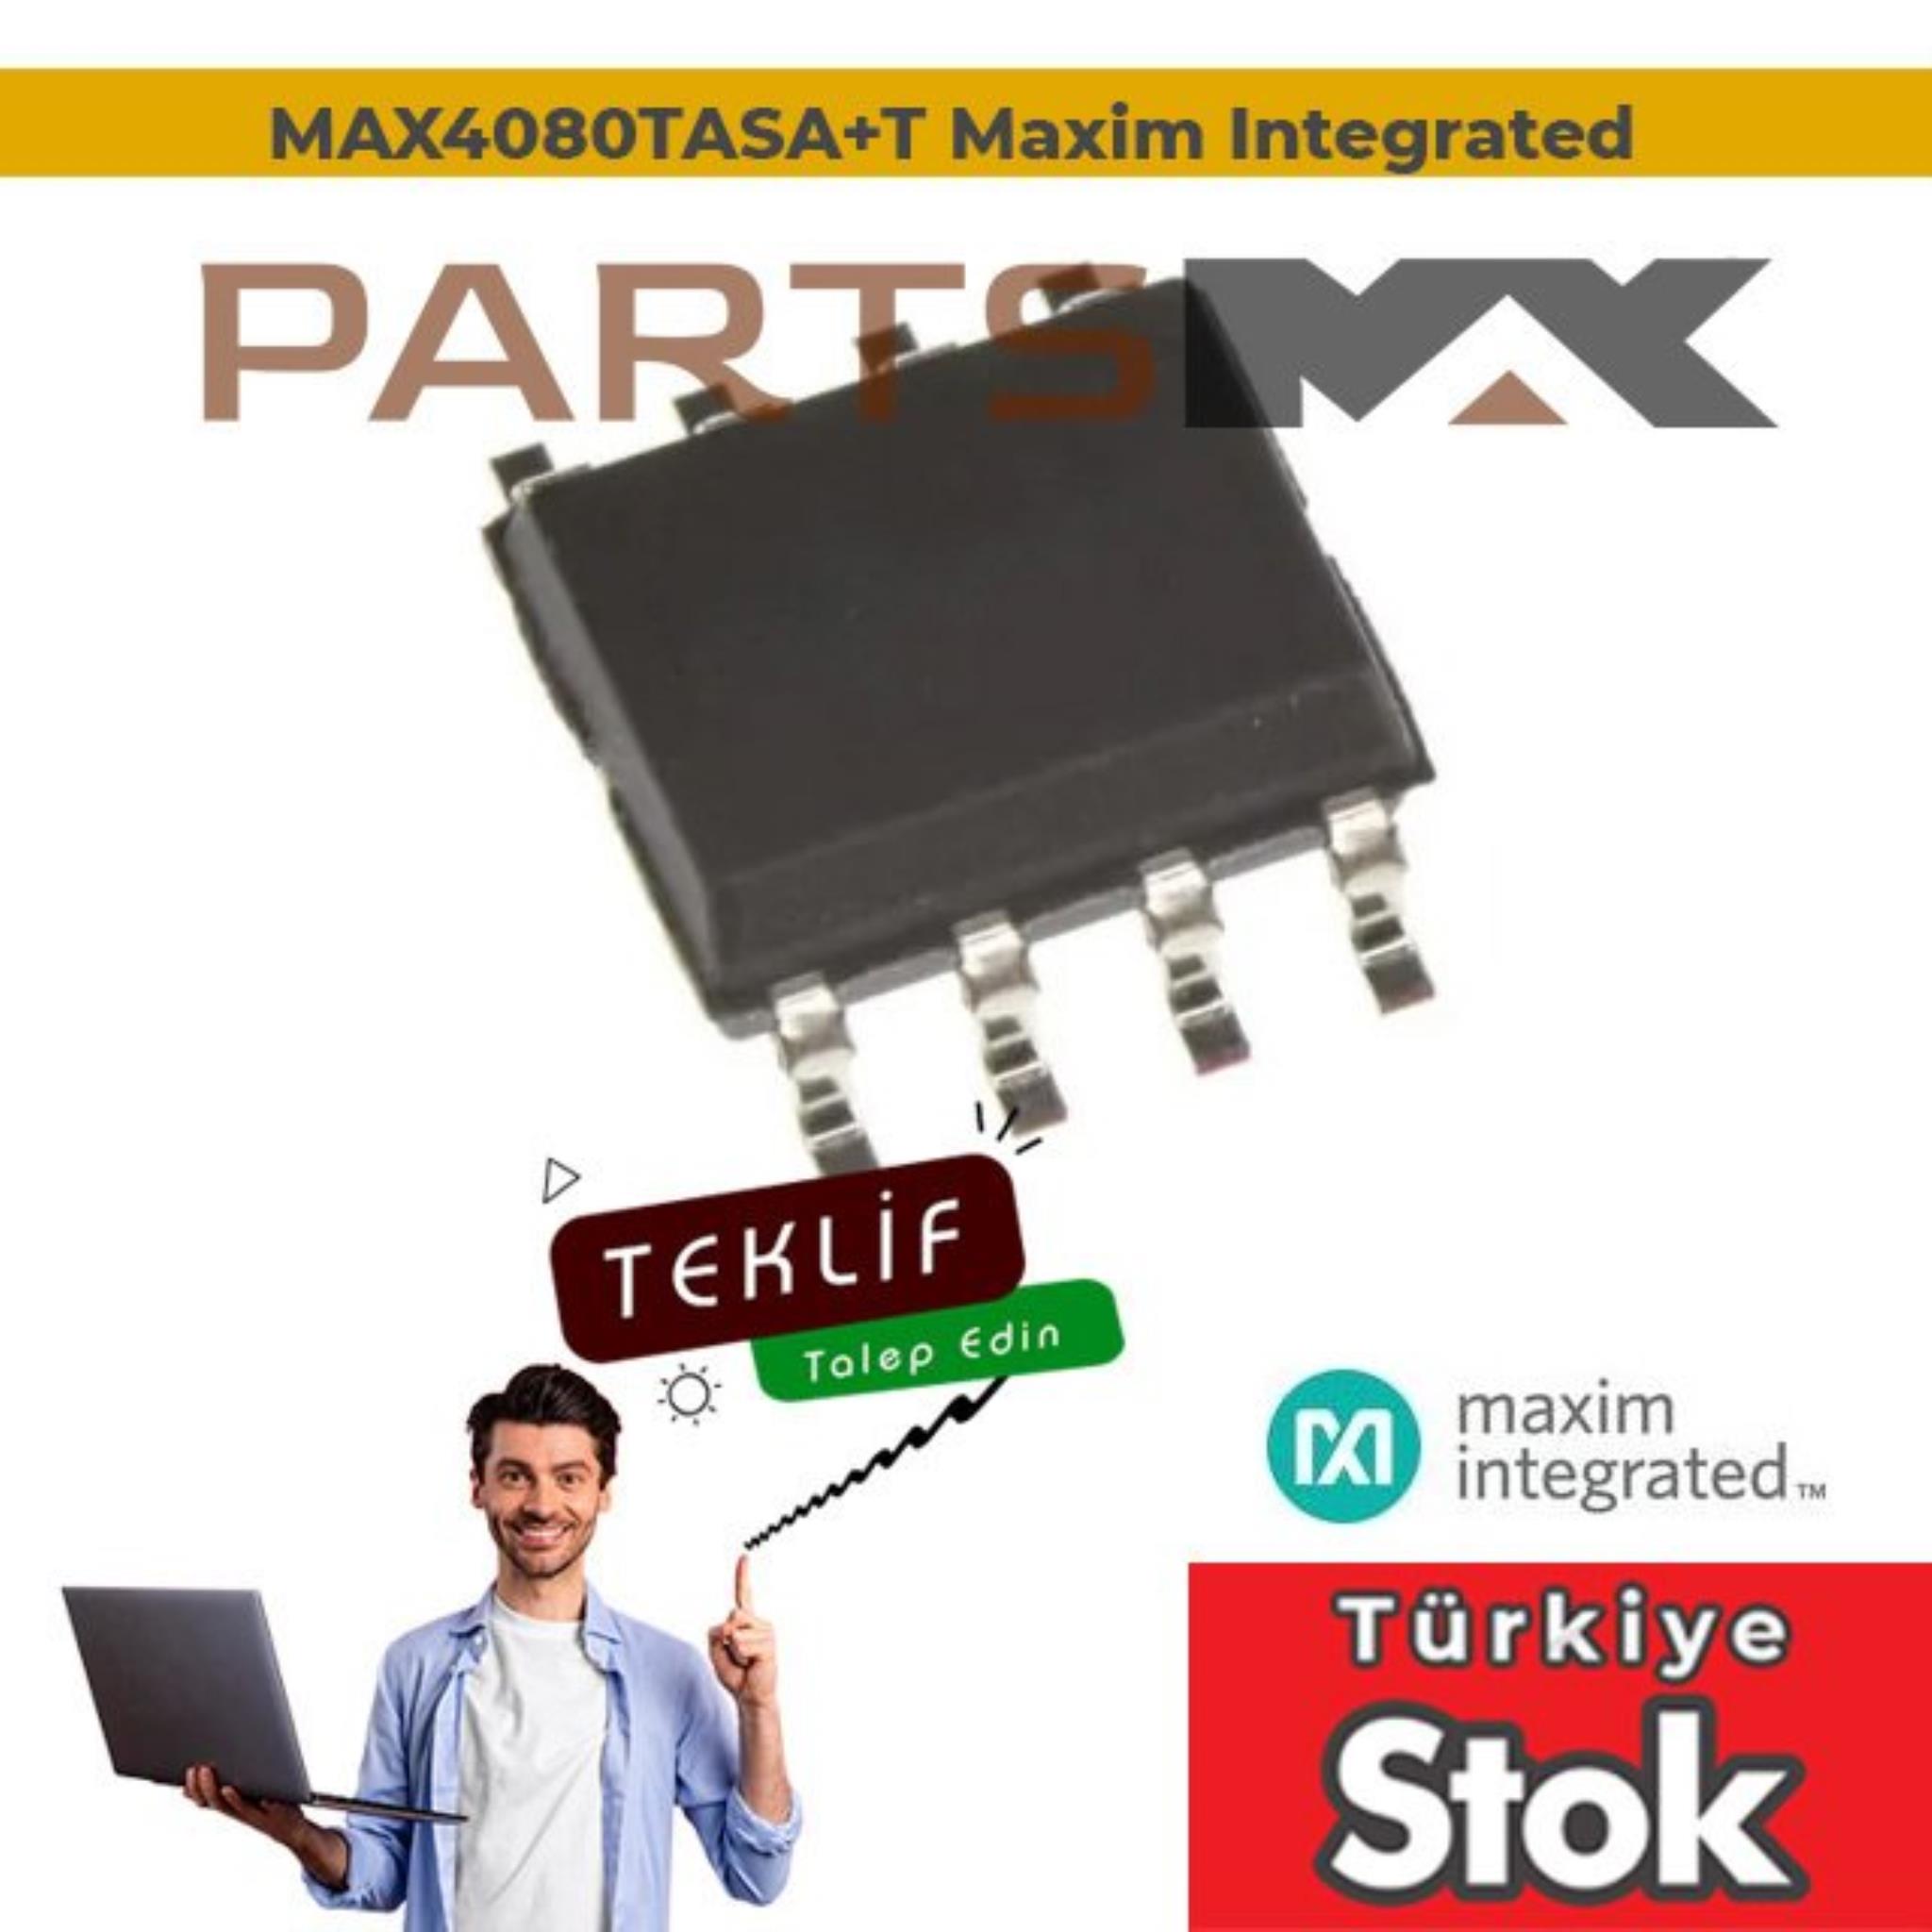 Picture of MAX4080TASA+T Maxim Integrated | Partsmax Türkiye